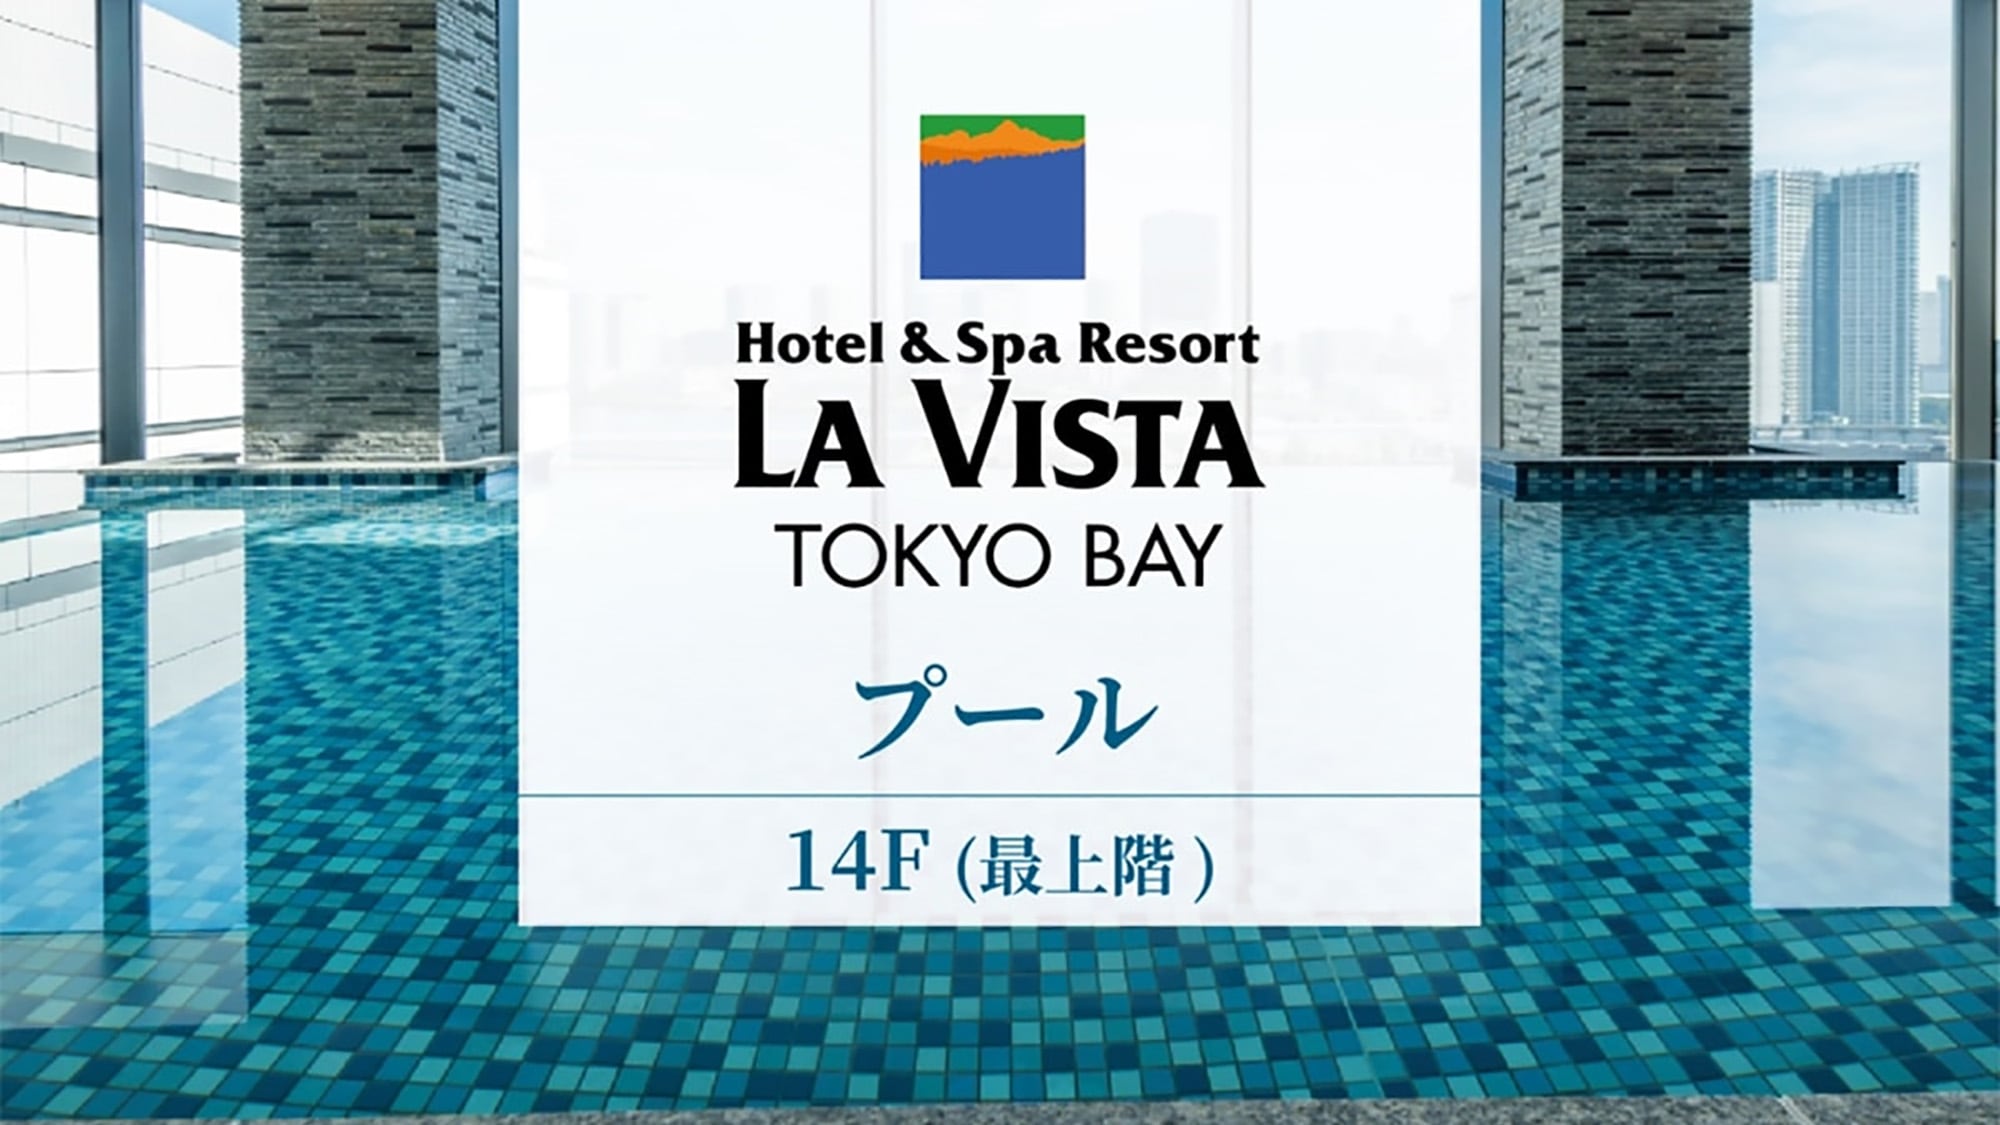 Hotel information and reservations for La Vista Tokyo Bay